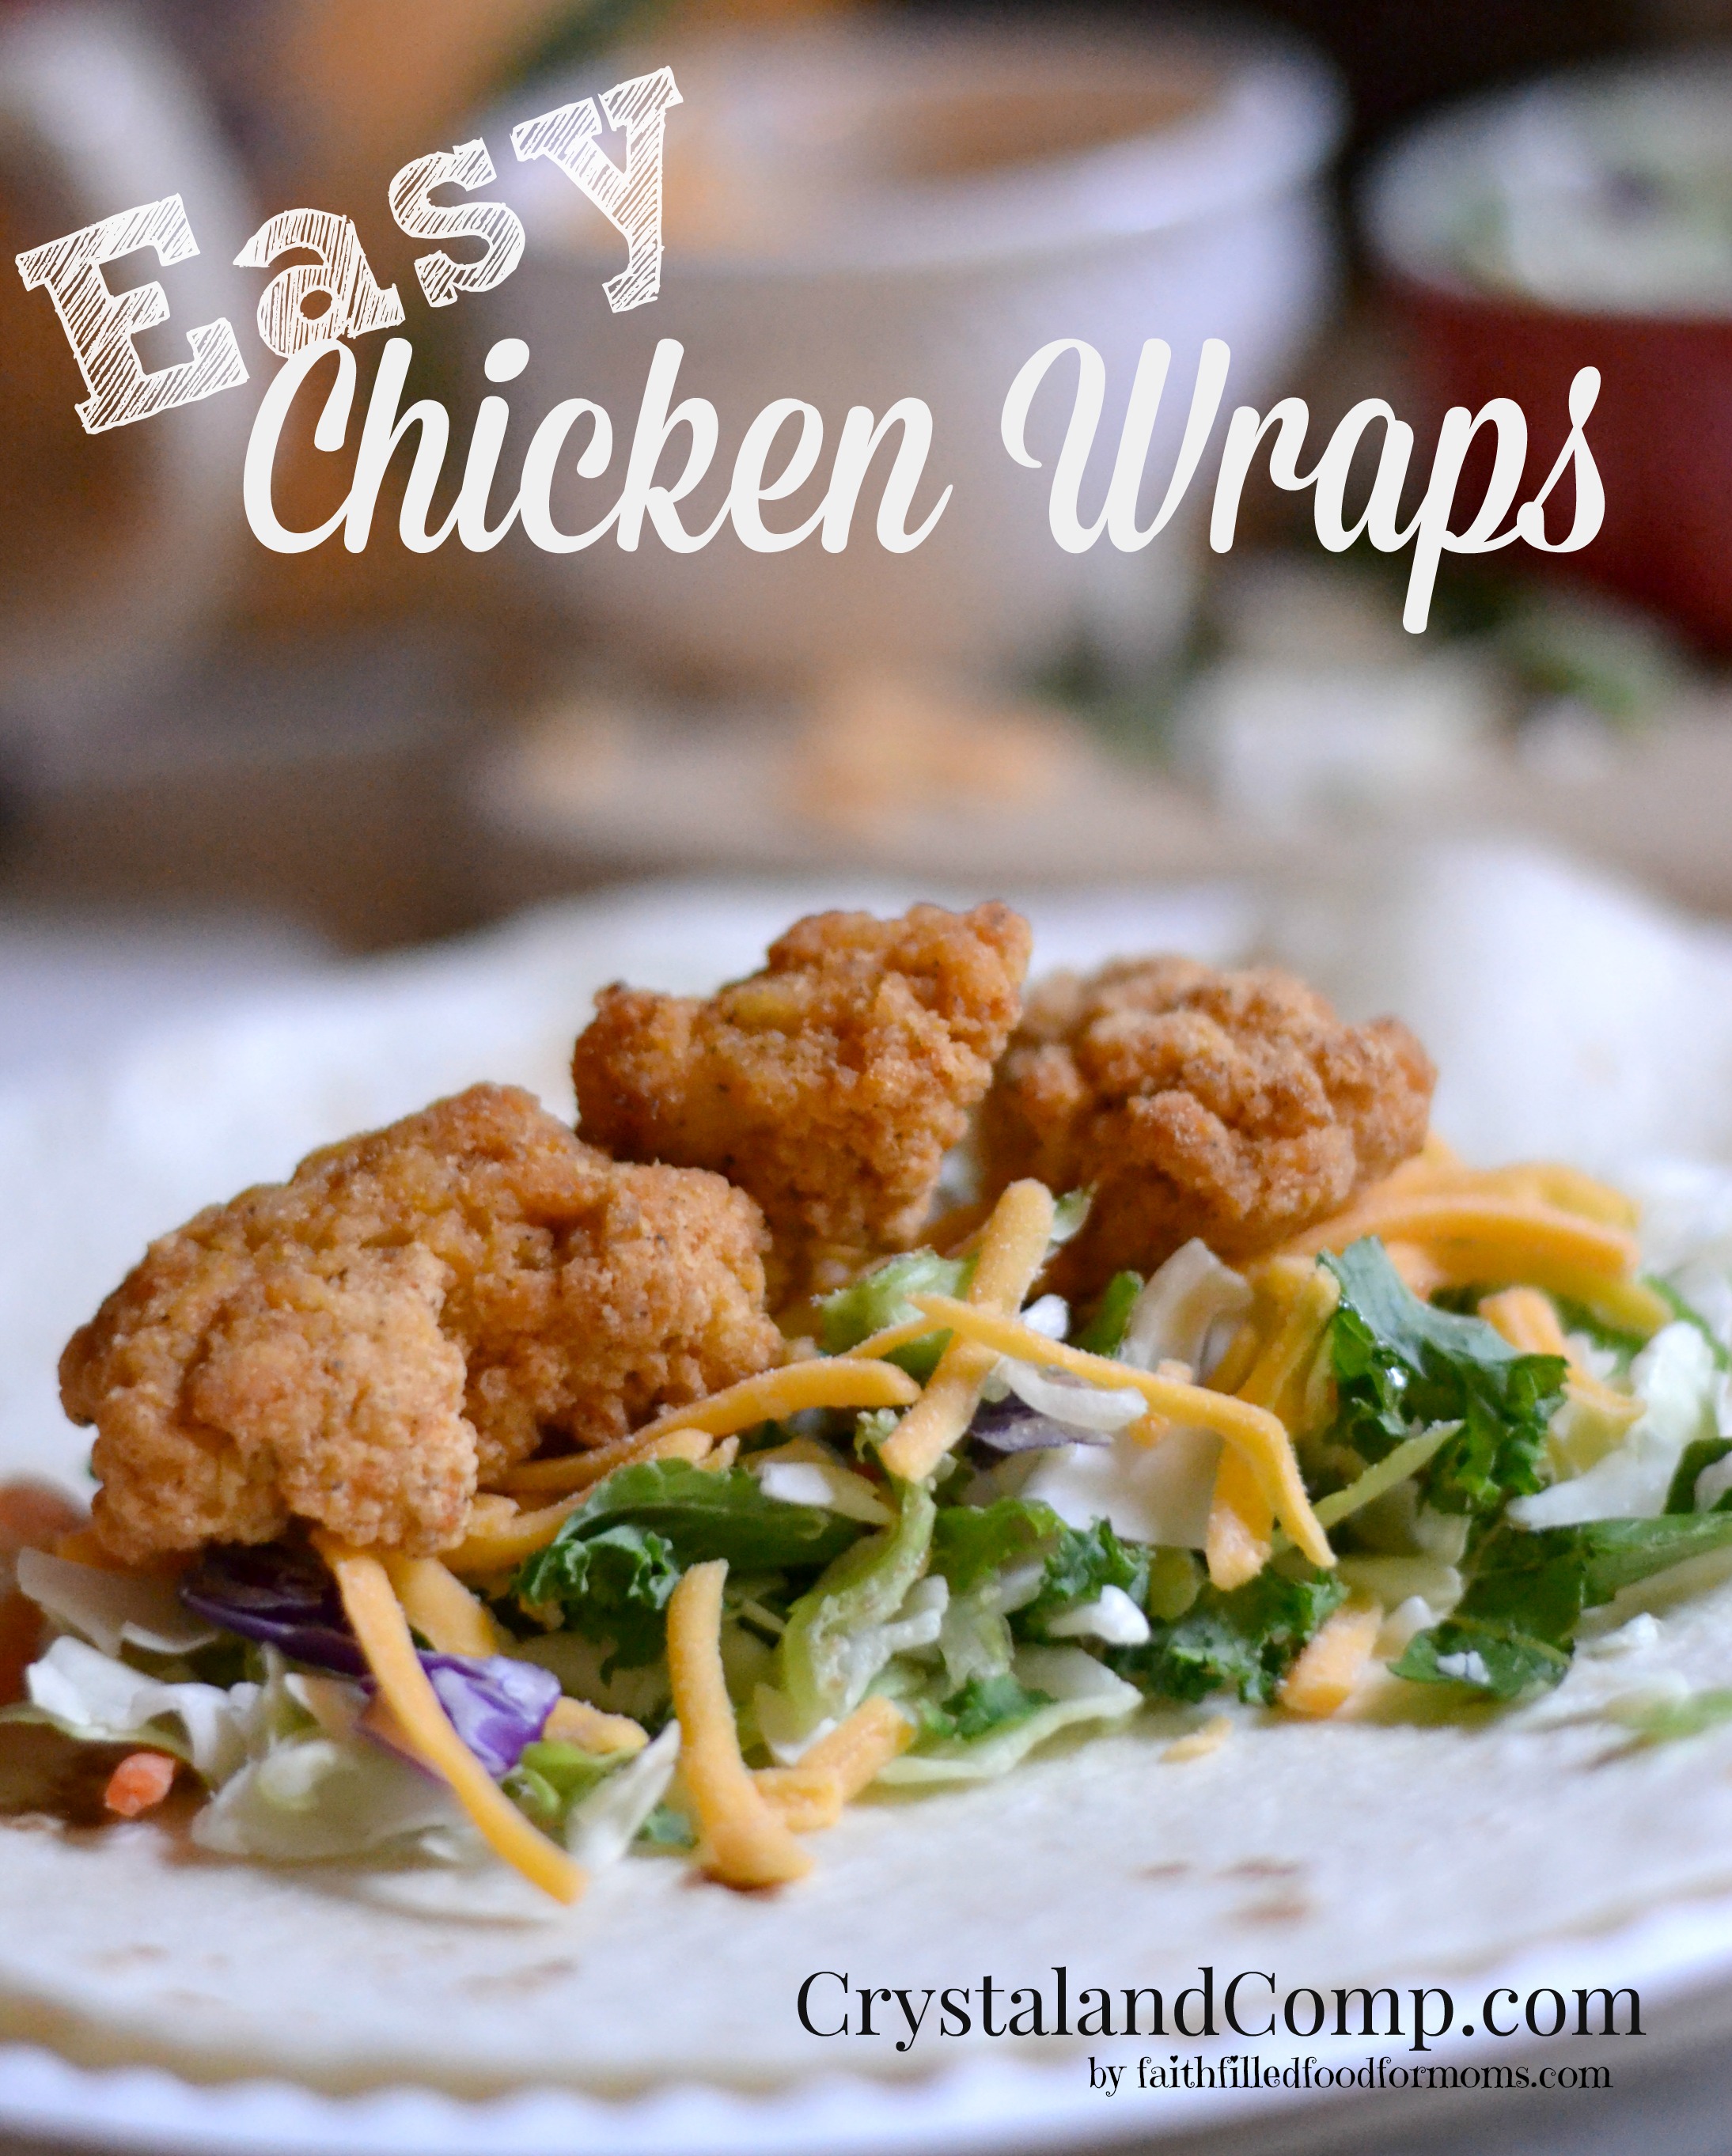 Easy Chicken Wraps